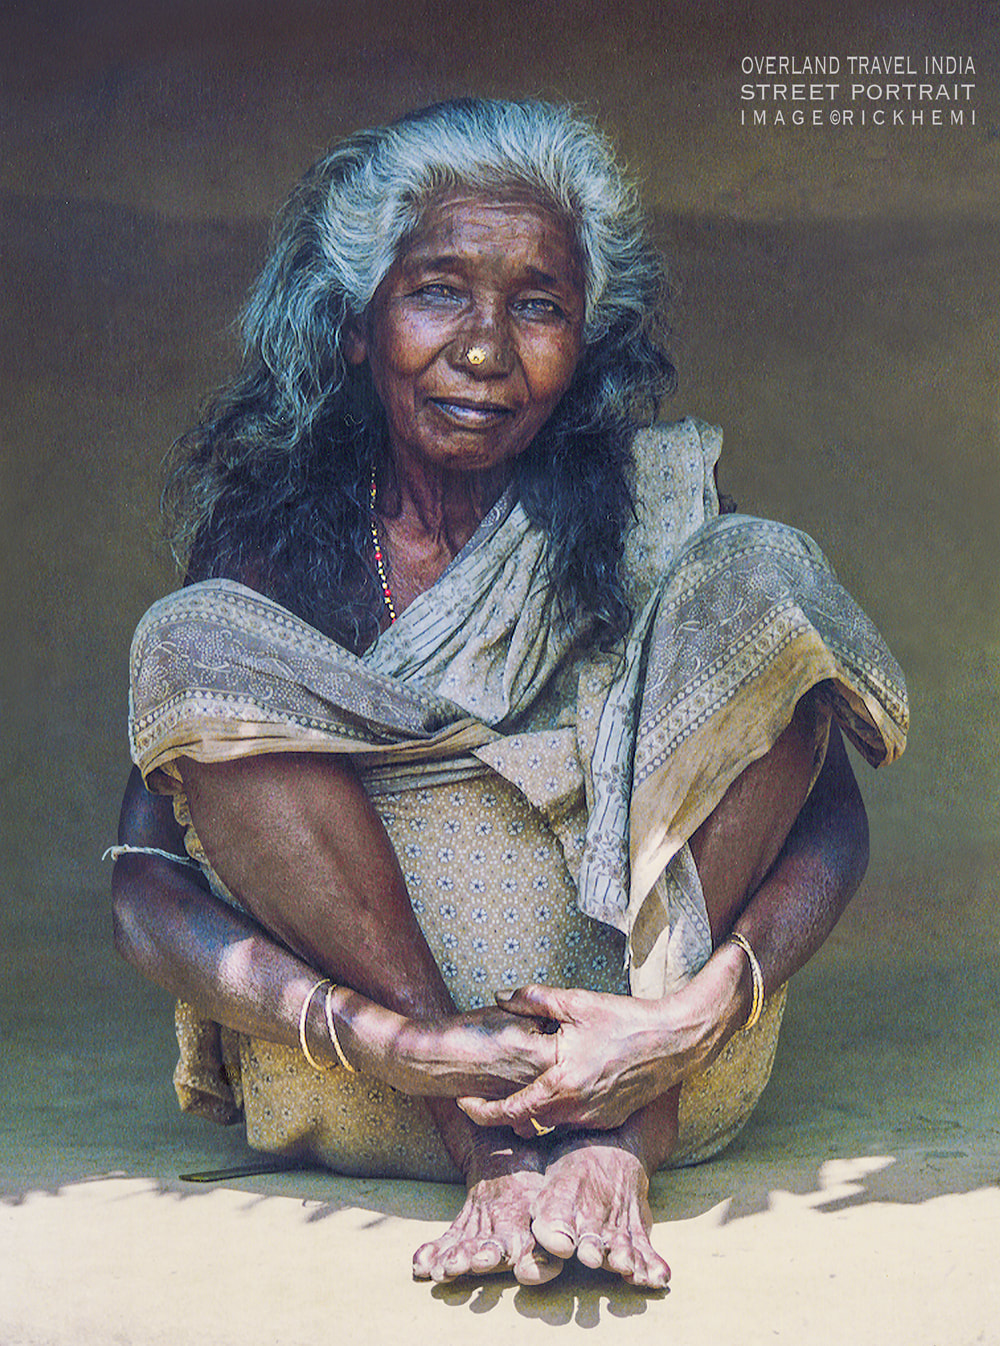 solo travel India, street portrait, SLR roll film 1980s, image by Rick Hemi 